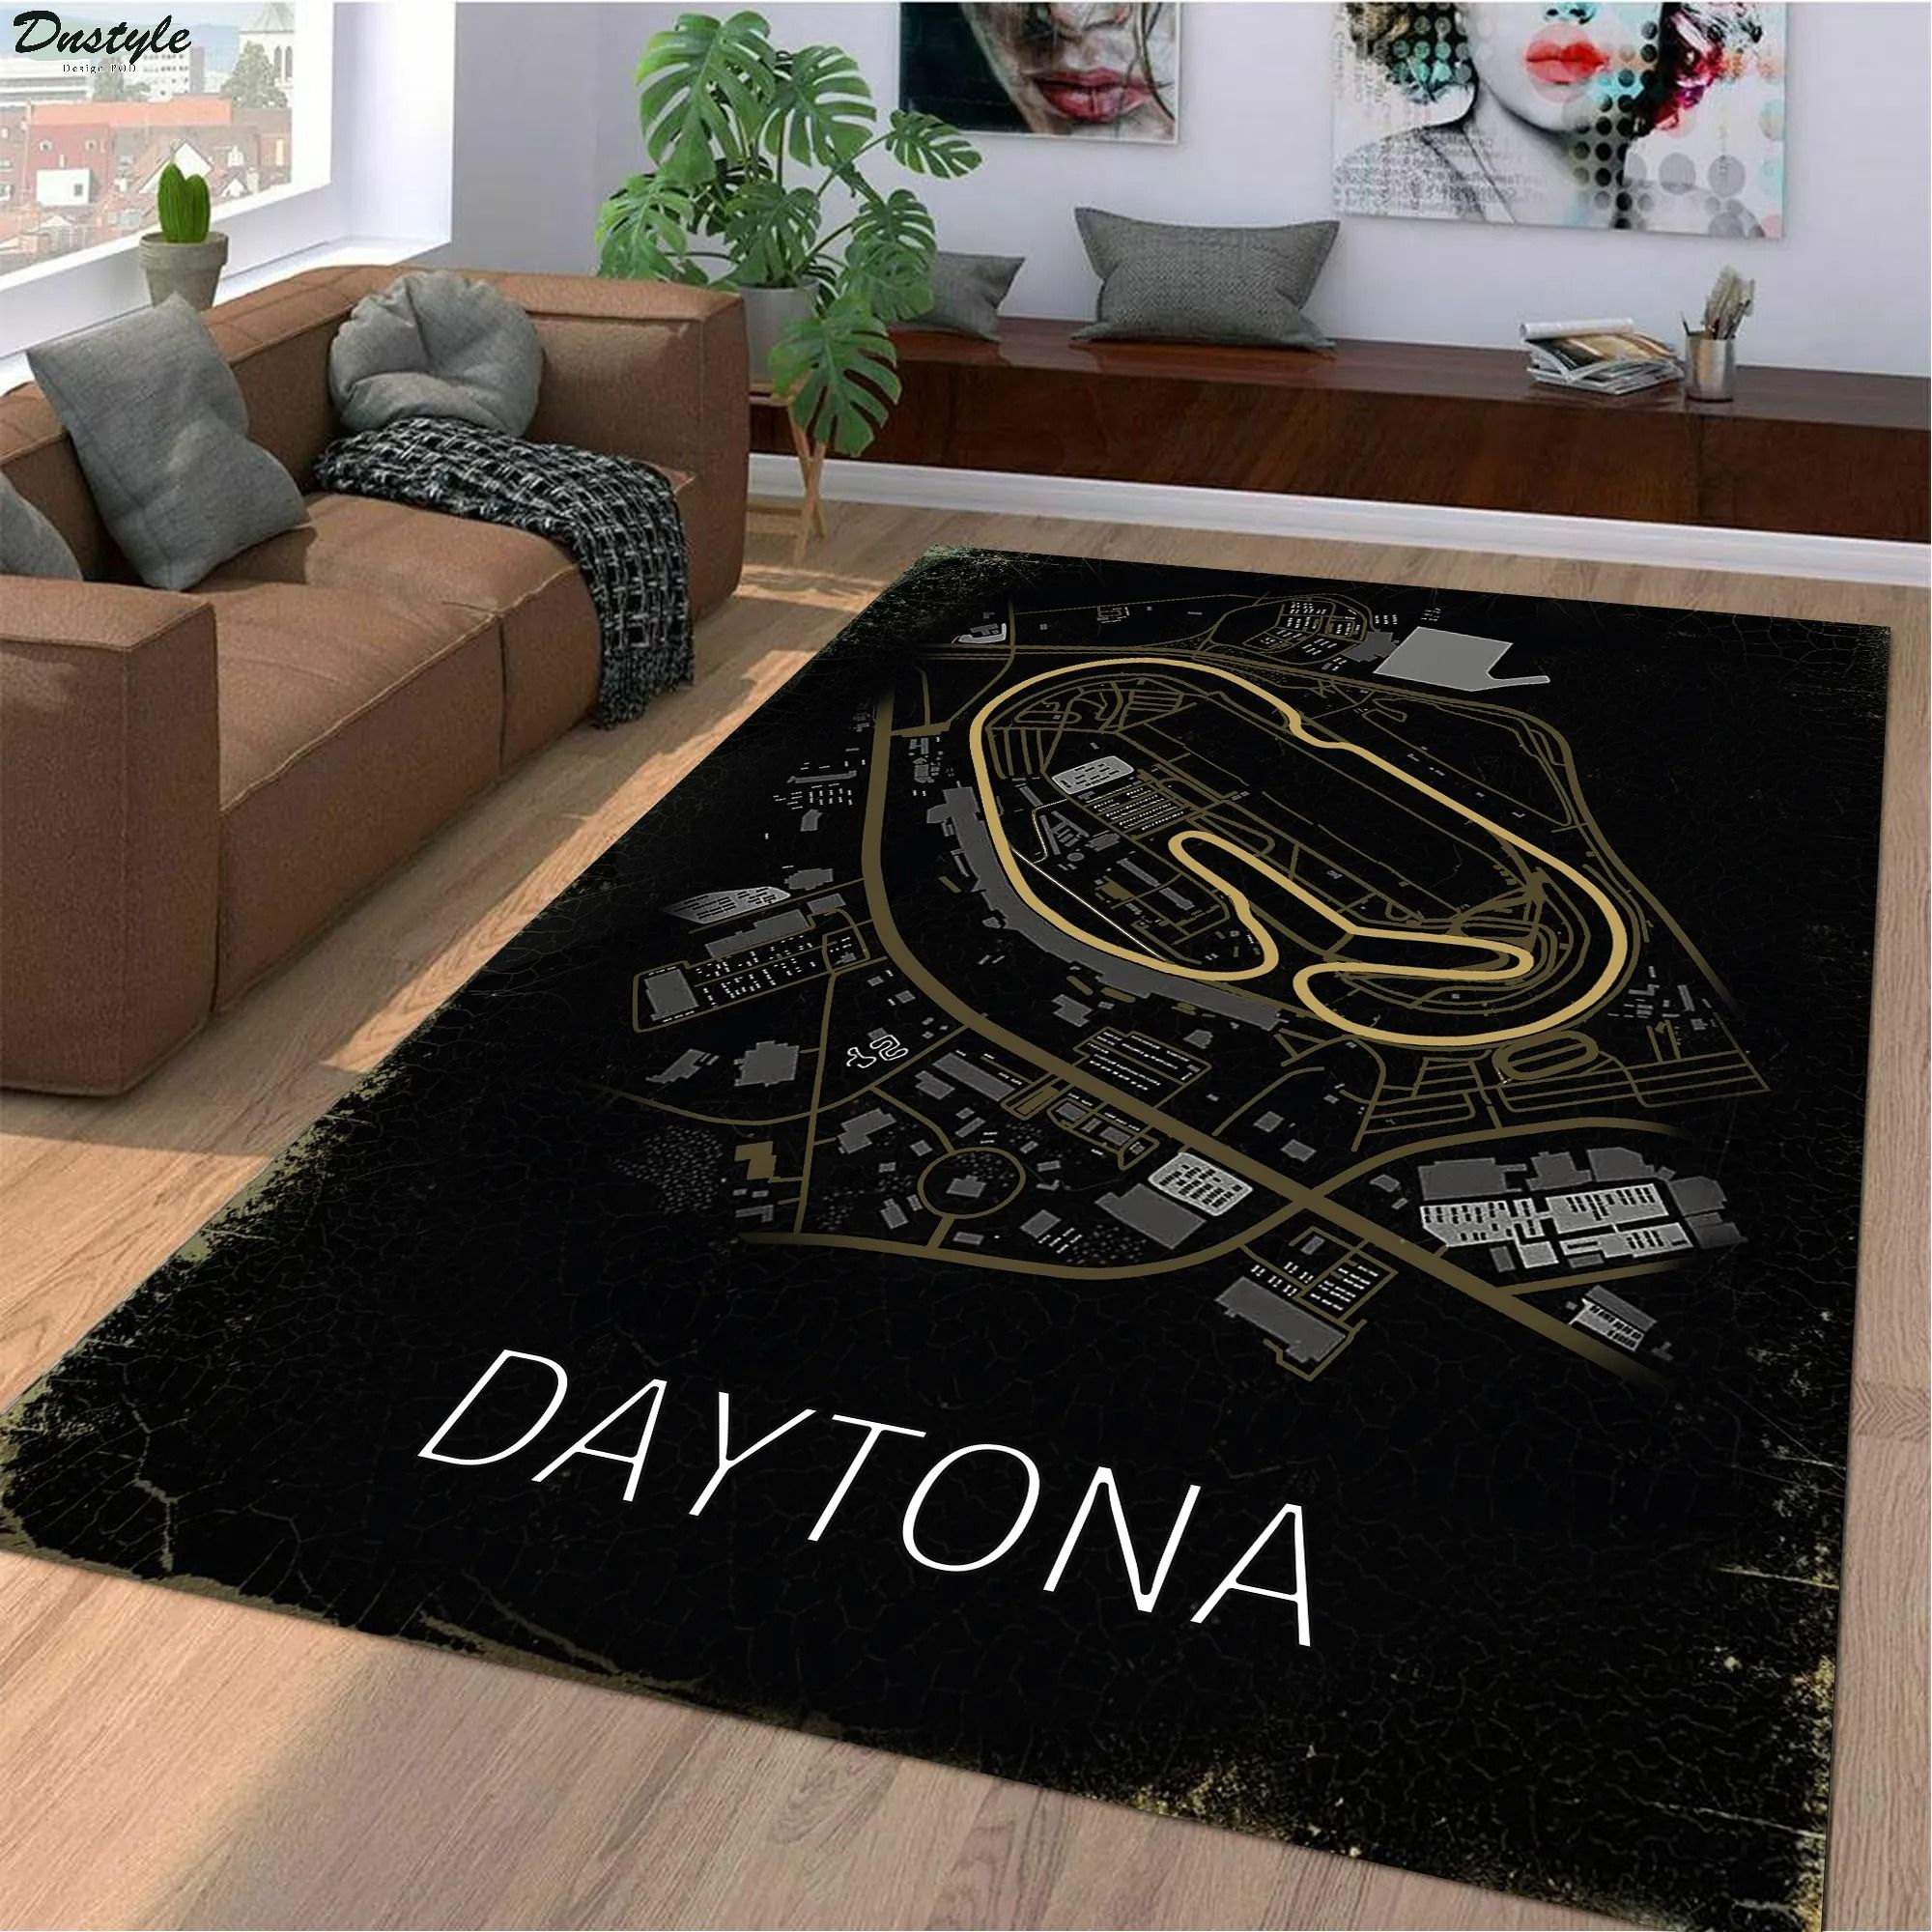 Daytona f1 track rug